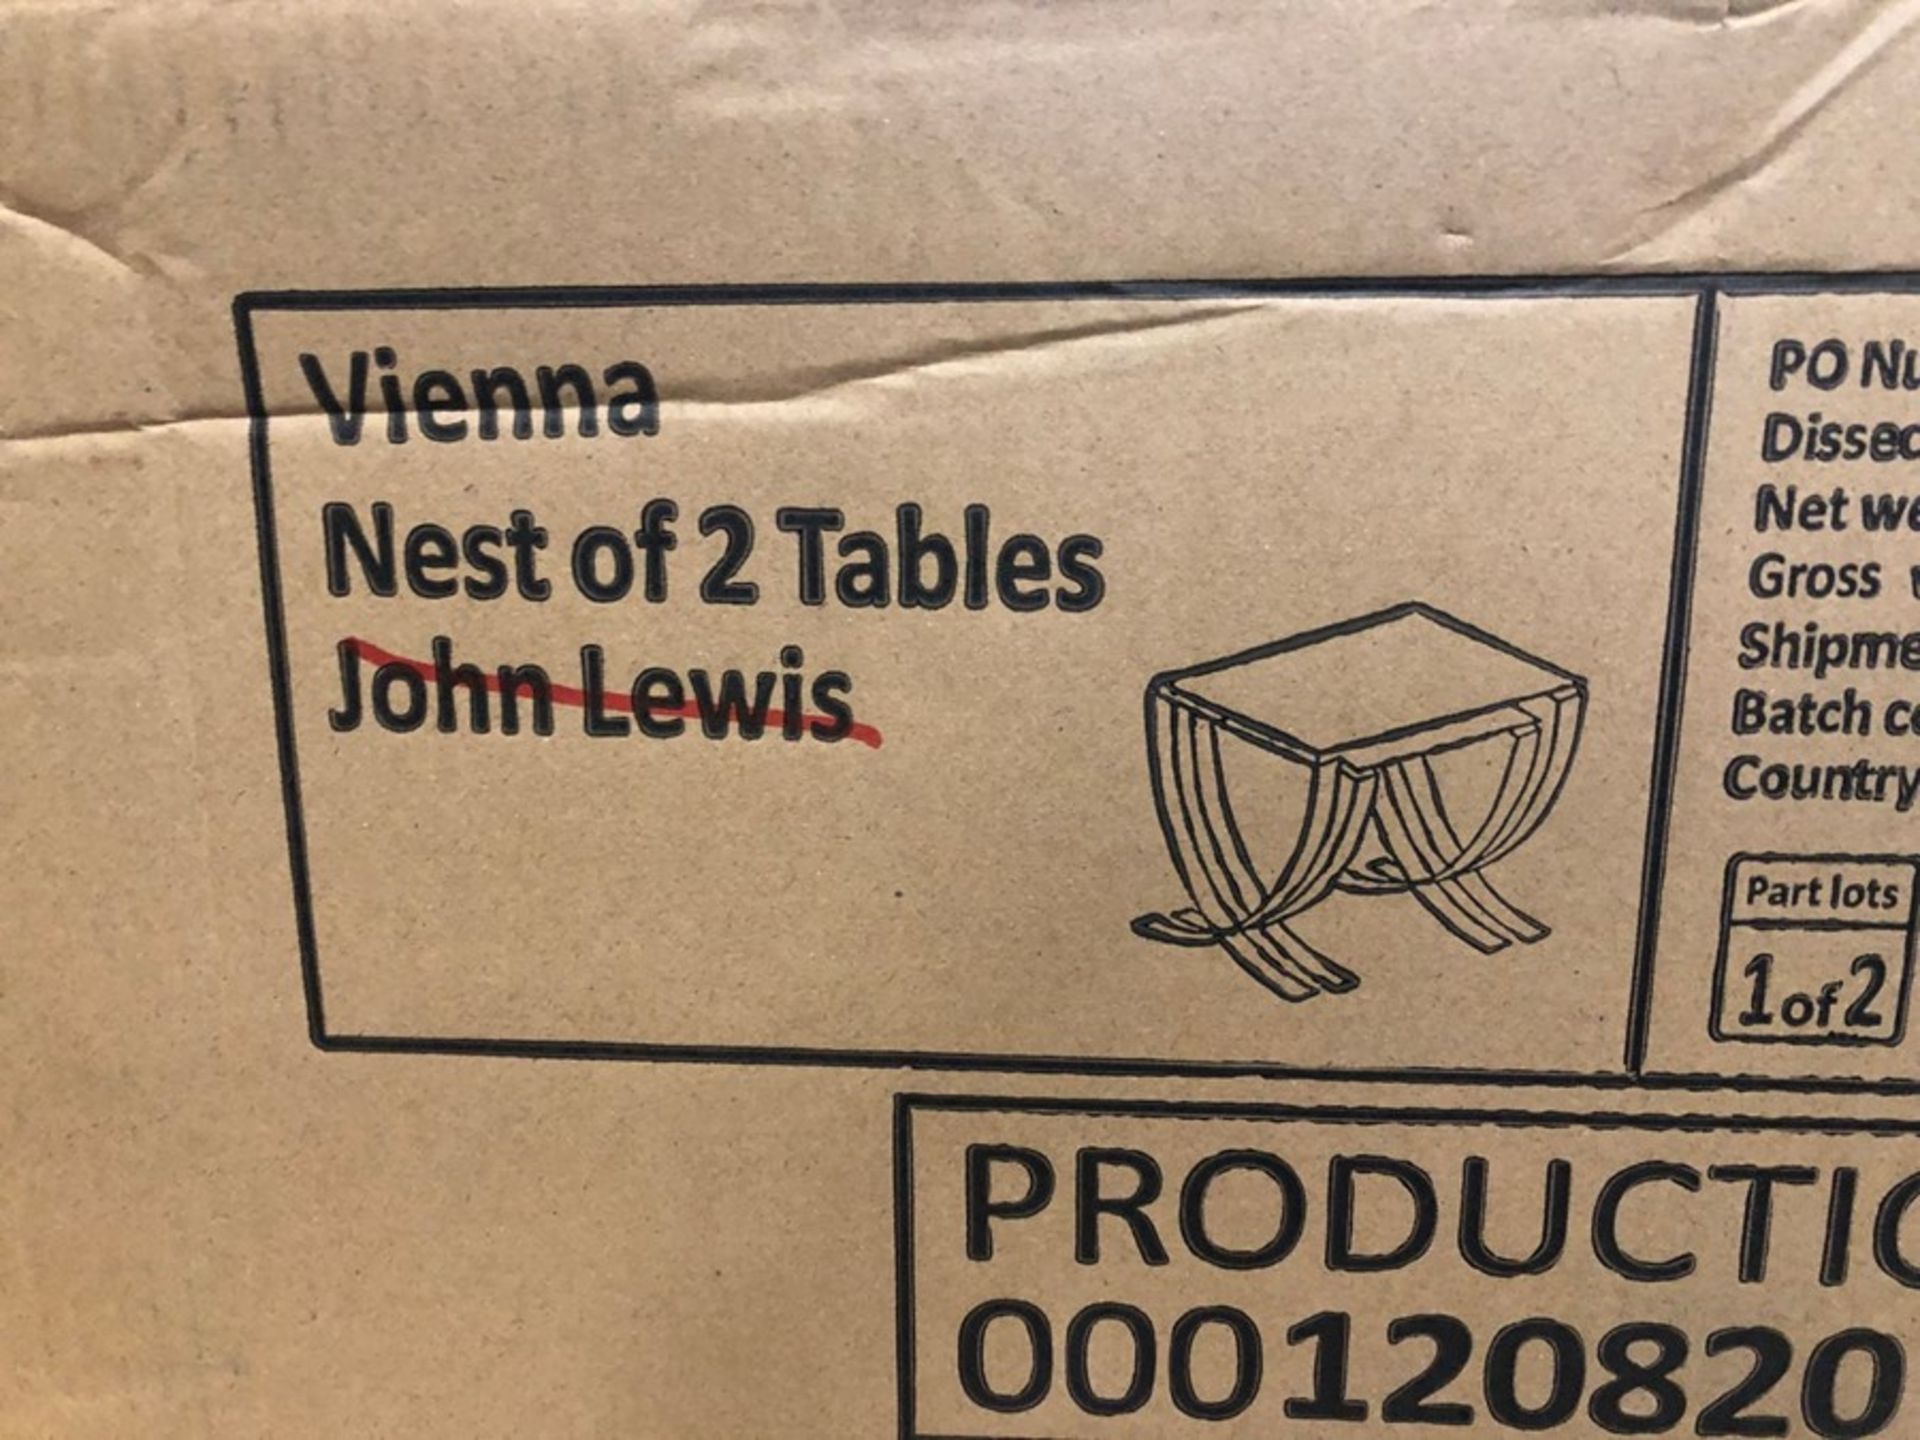 JOHN LEWIS VIENNA NEST OF 2 TABLES